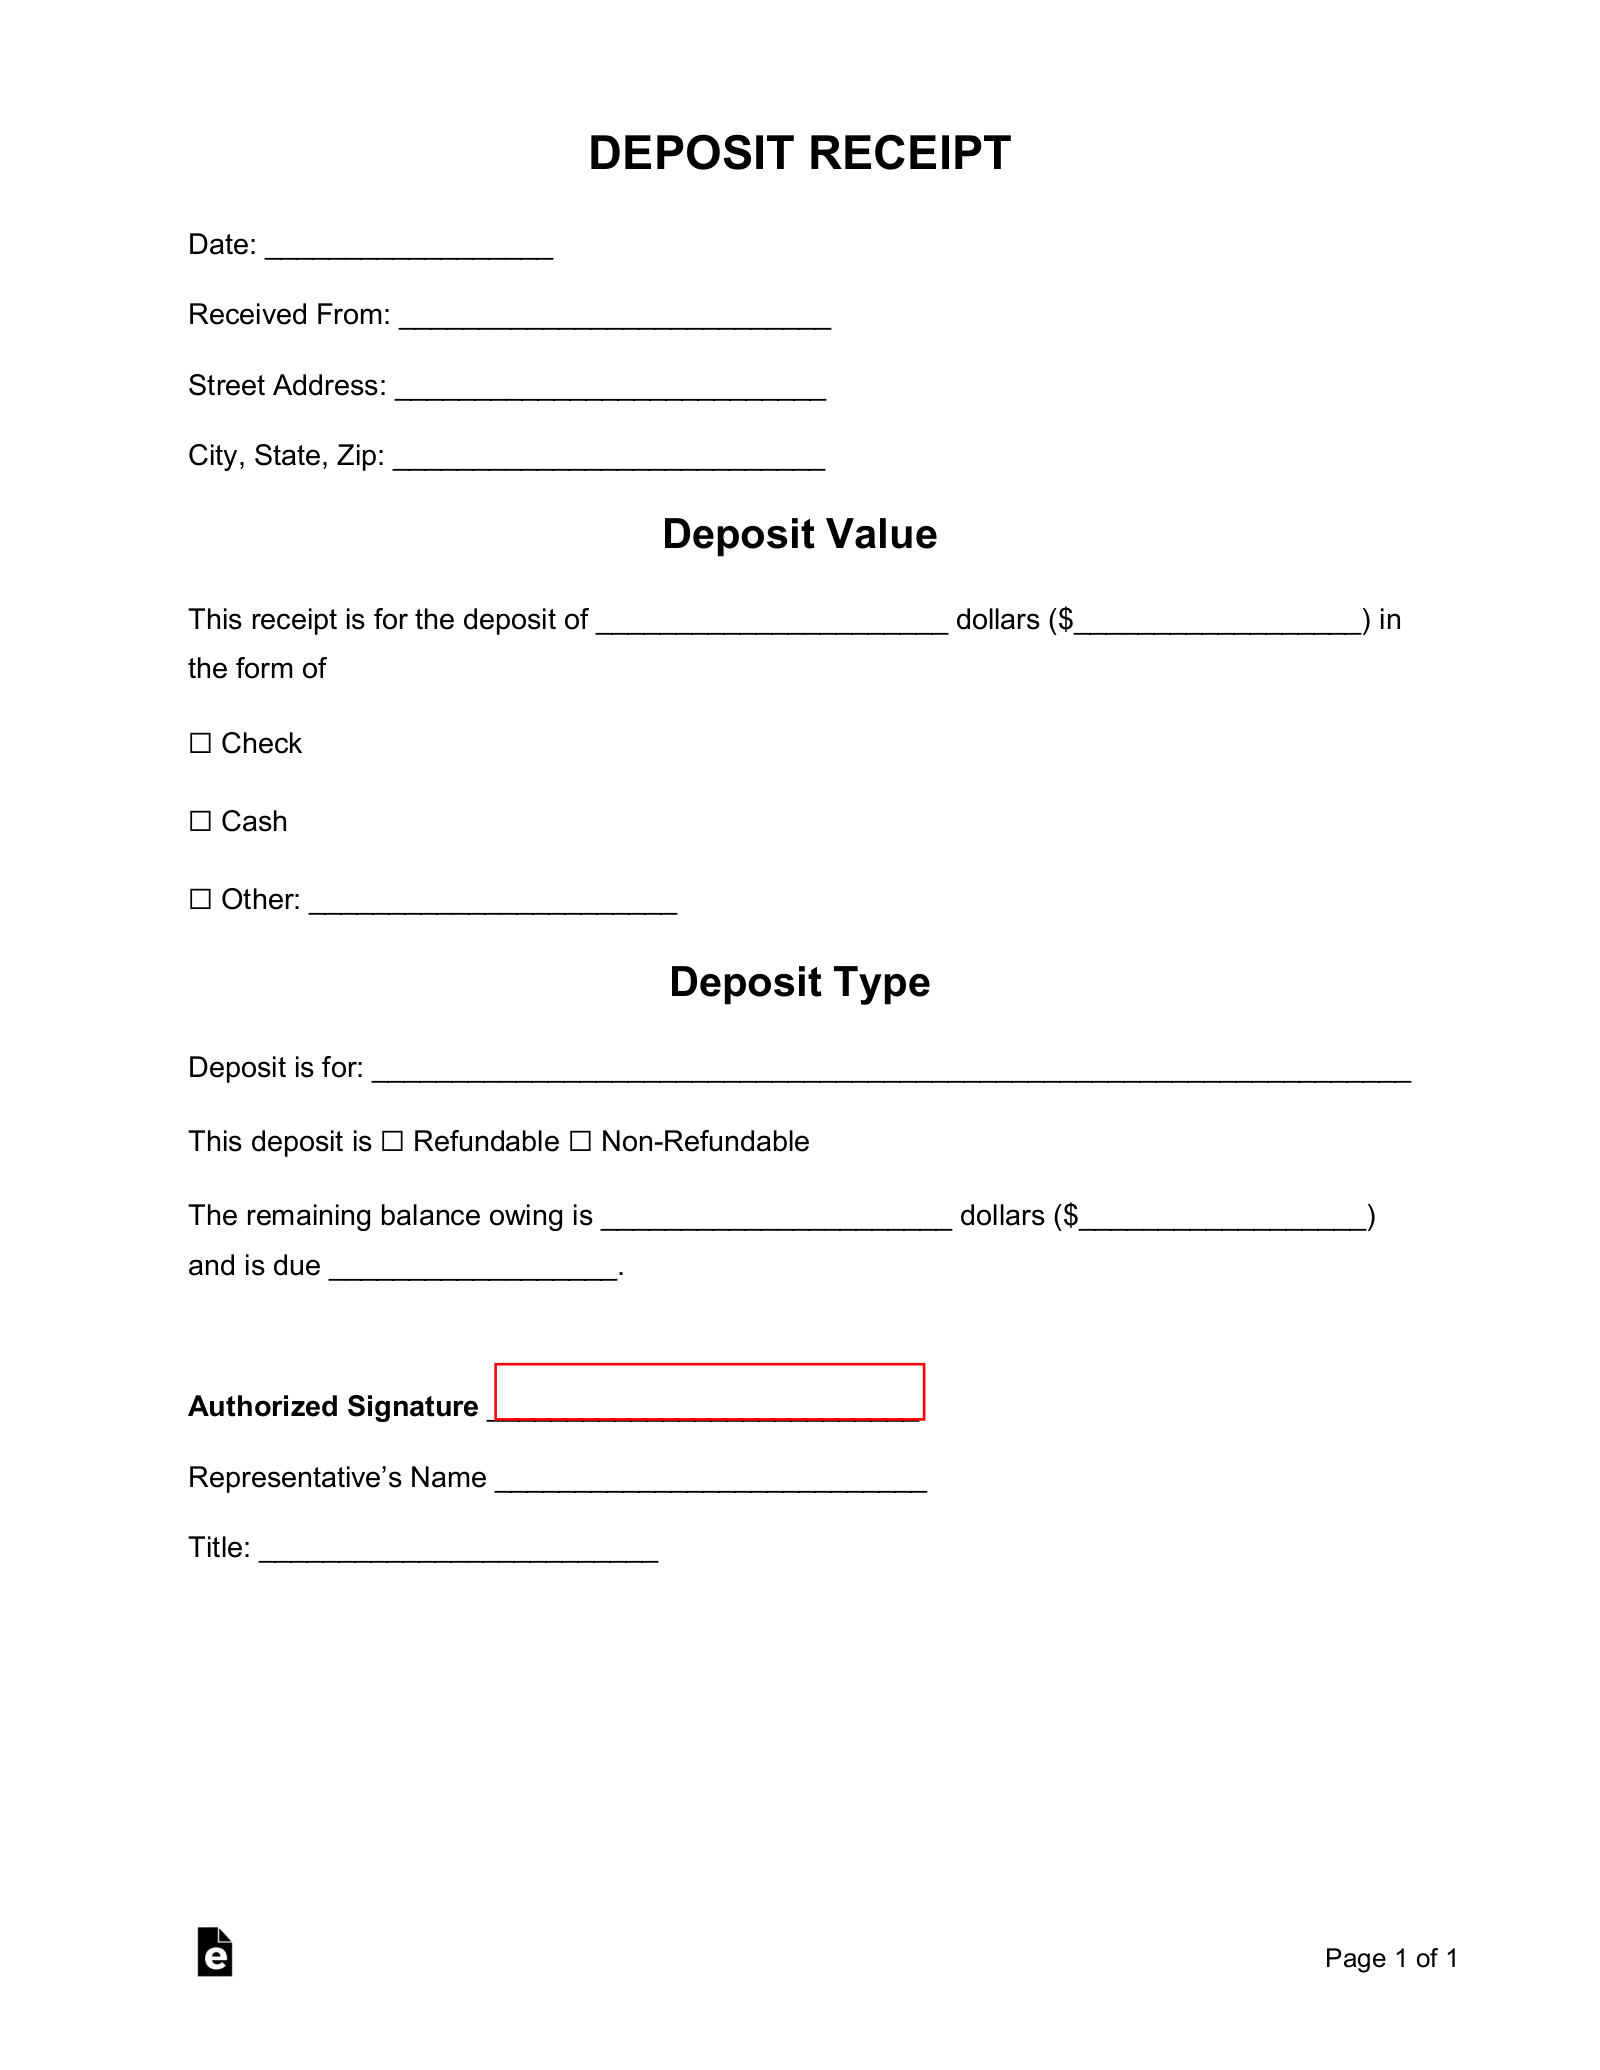 Deposit Receipt Templates (10)